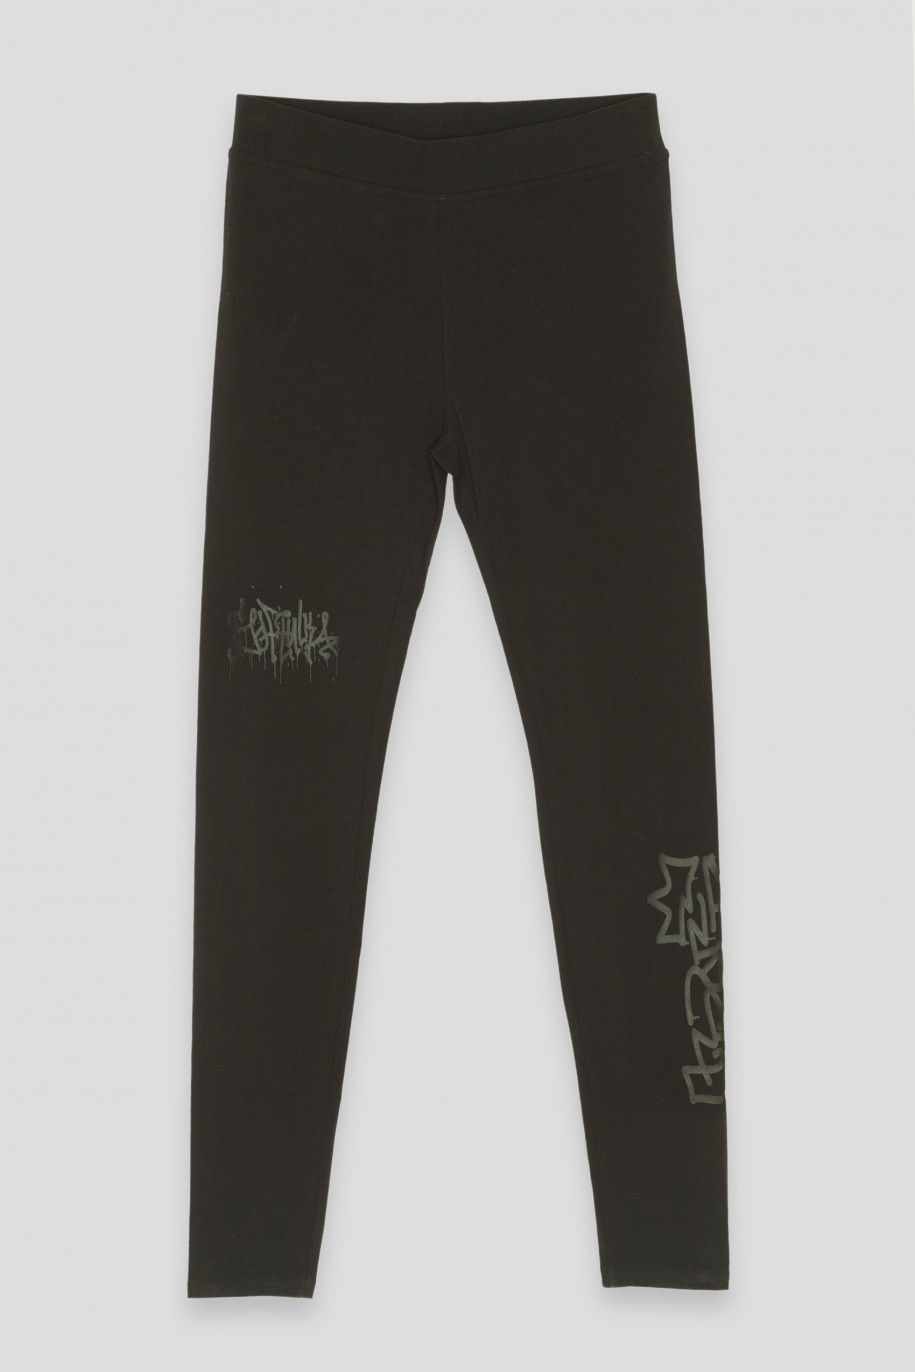 Czarne legginsy z nadrukiem graffiti - 43299